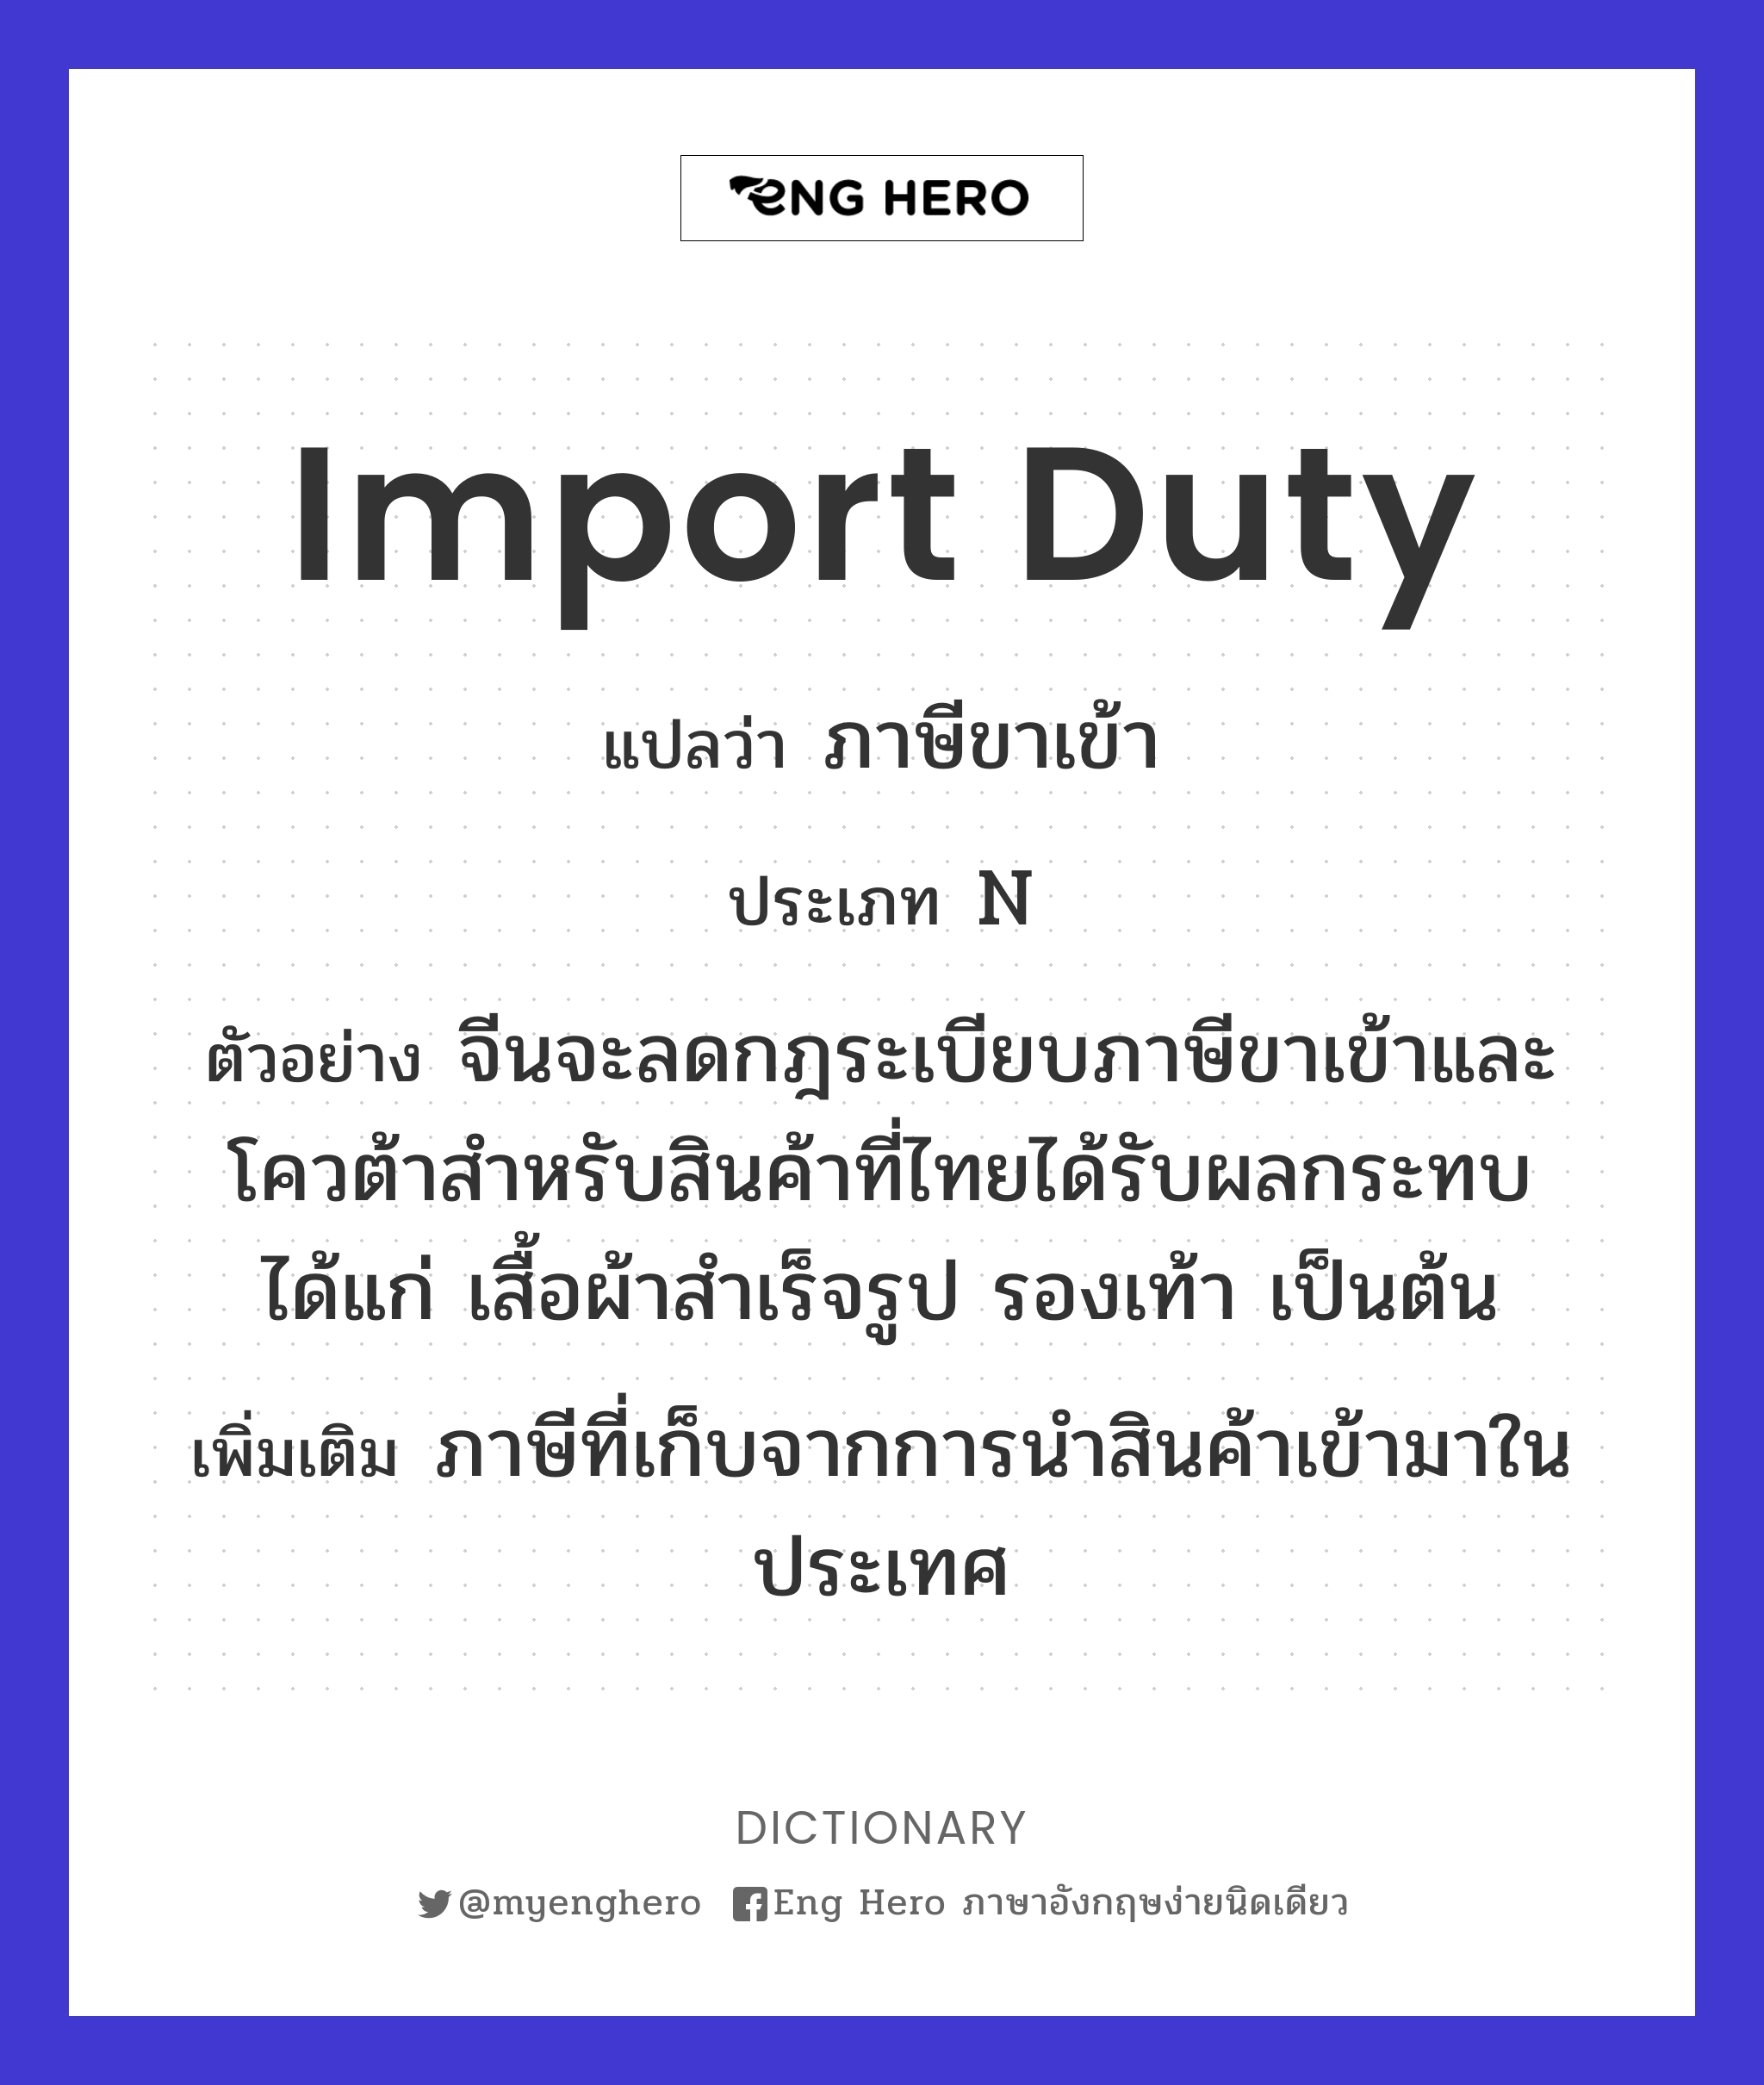 import duty